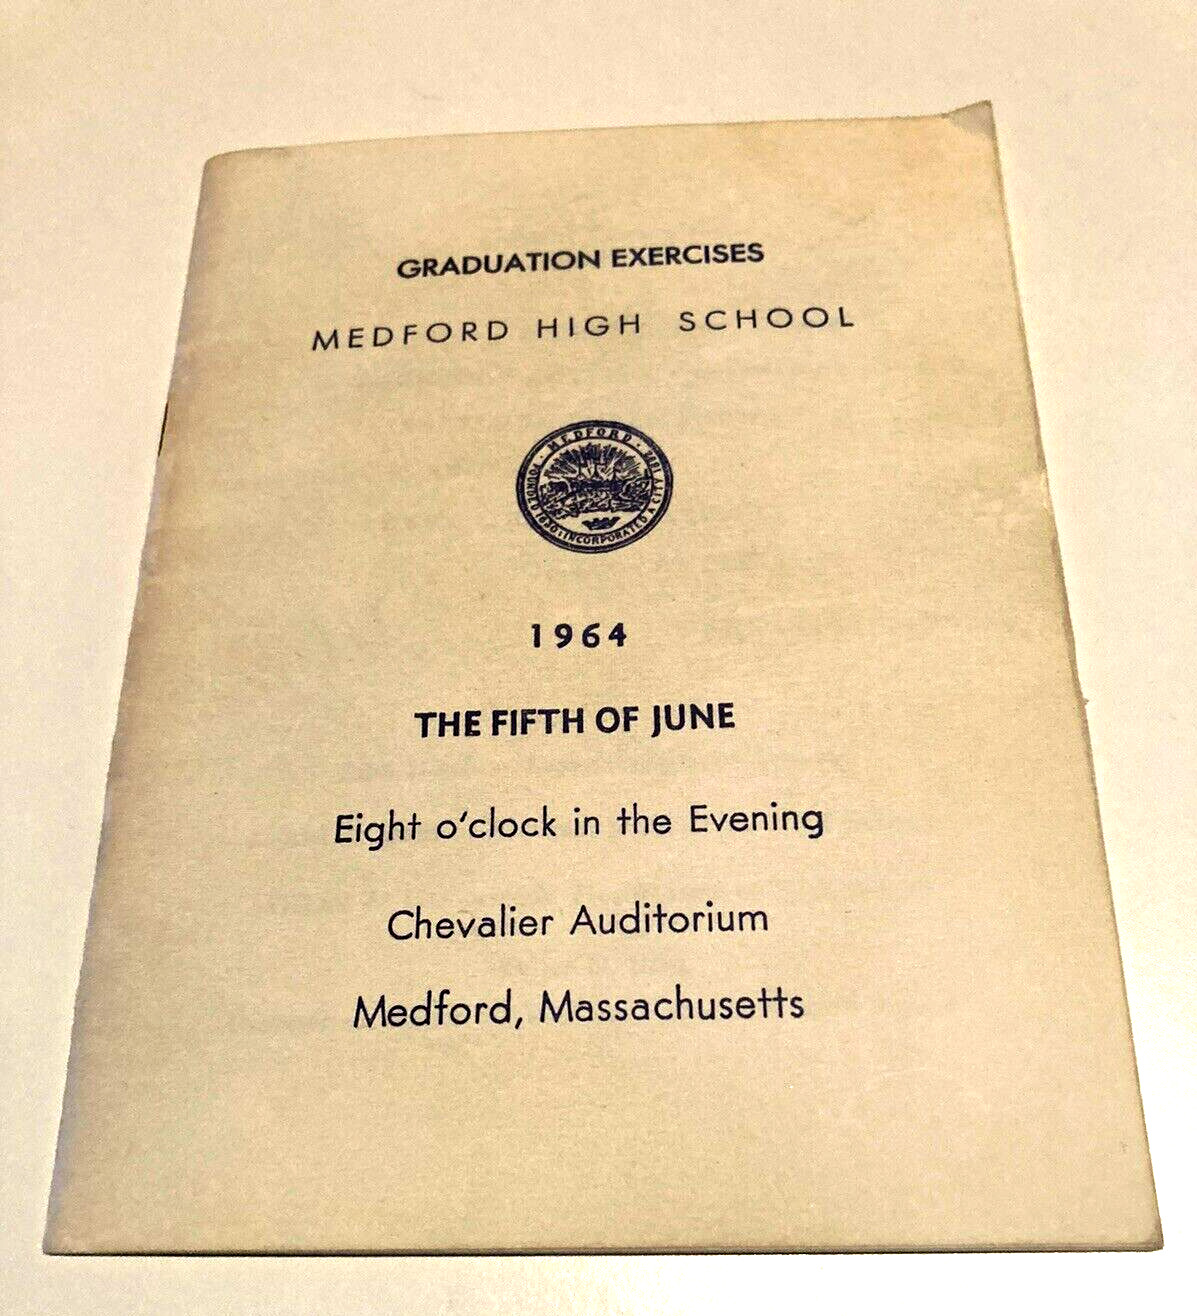 MEDFORD MA MEDFORD HIGH SCHOOL CLASS OF 1964 GRADUATION EXCERCISE PROGRAM